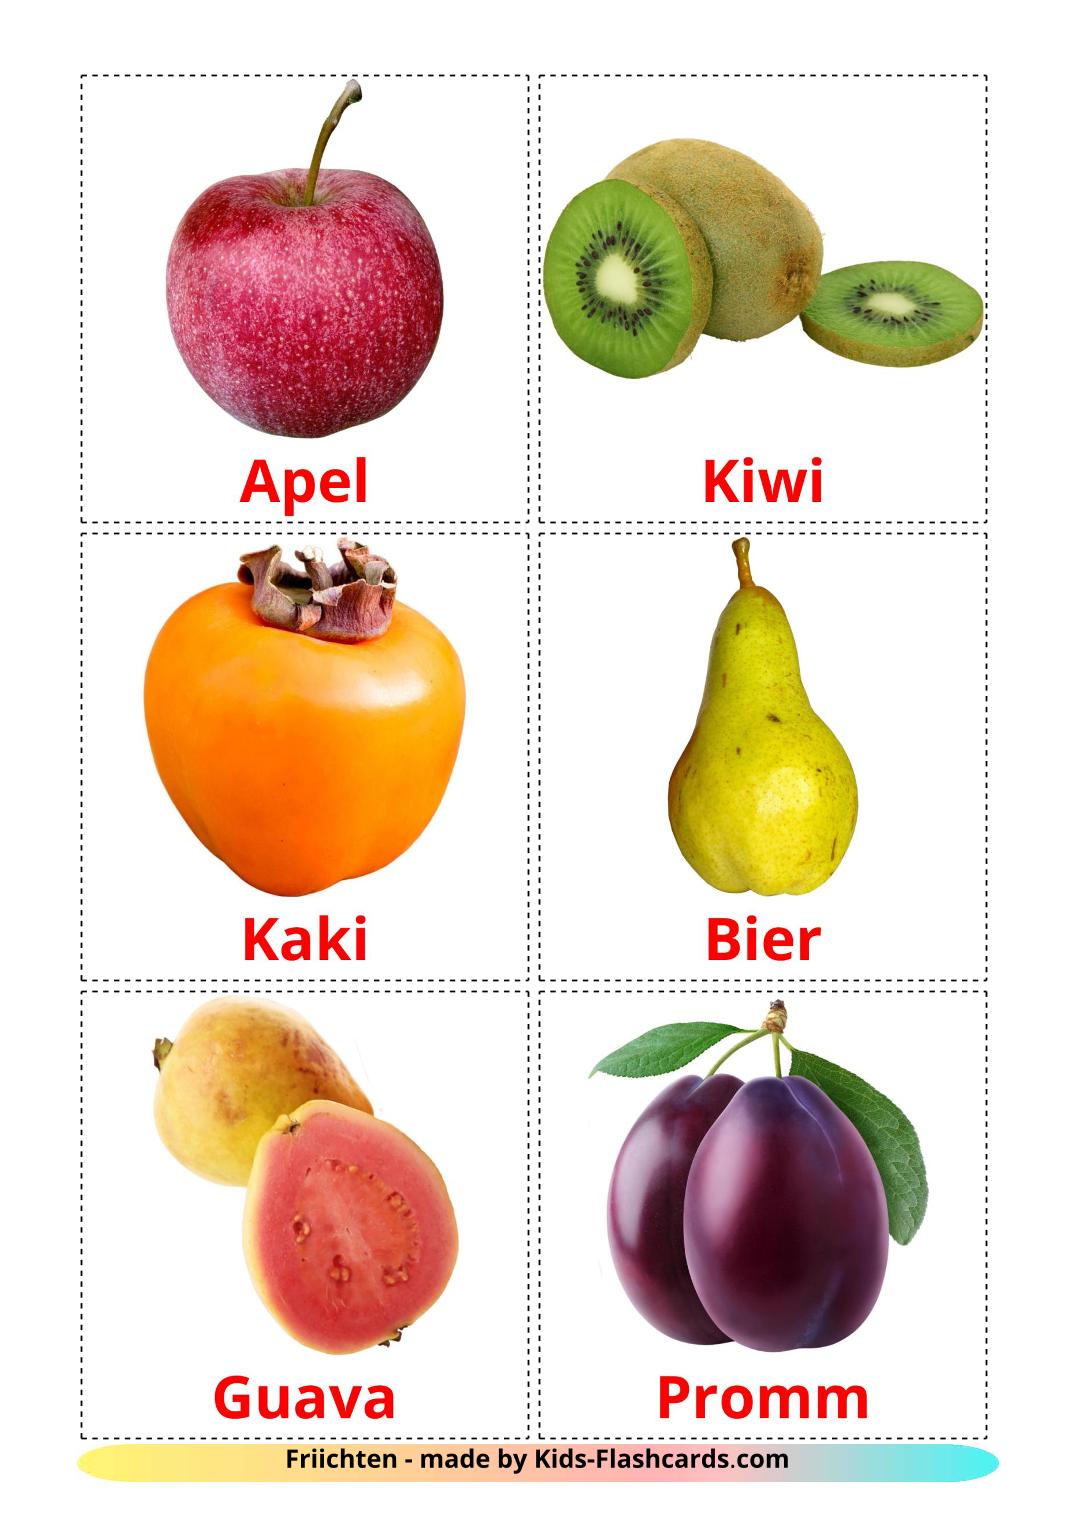 Les Fruits - 20 Flashcards luxembourgeois imprimables gratuitement